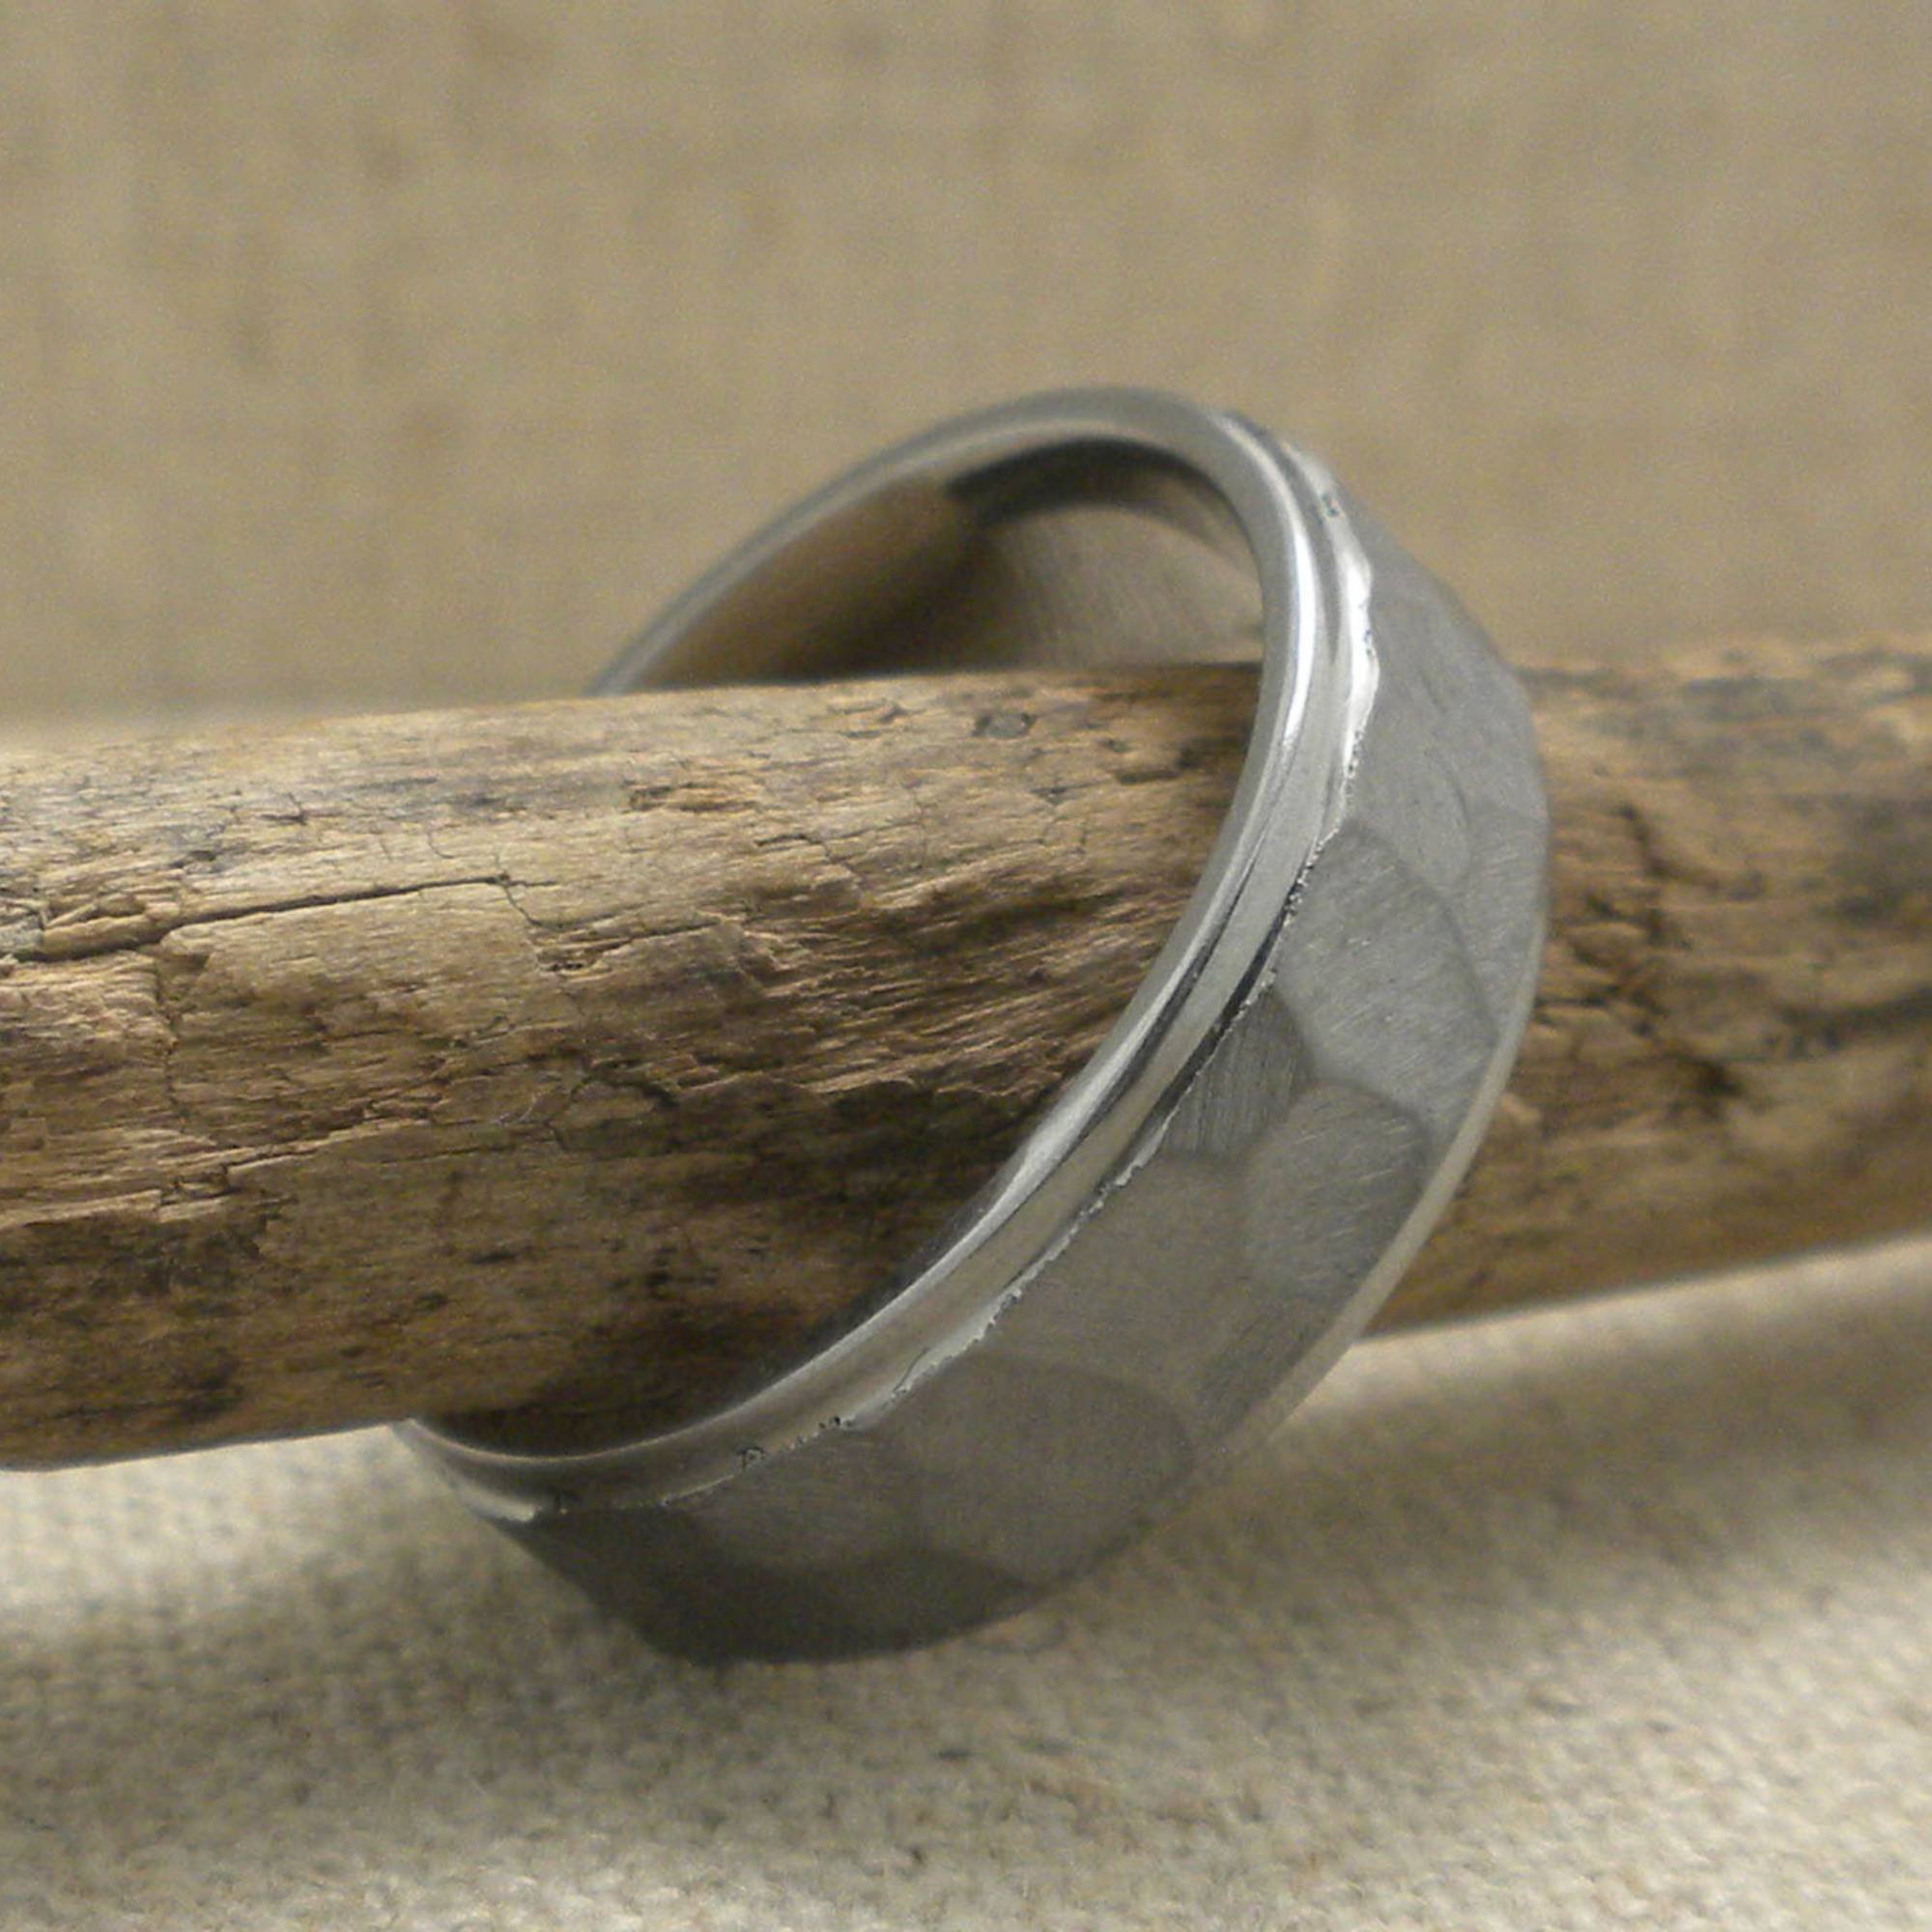 Tantalum Wedding Ring from Lashbrook Designs